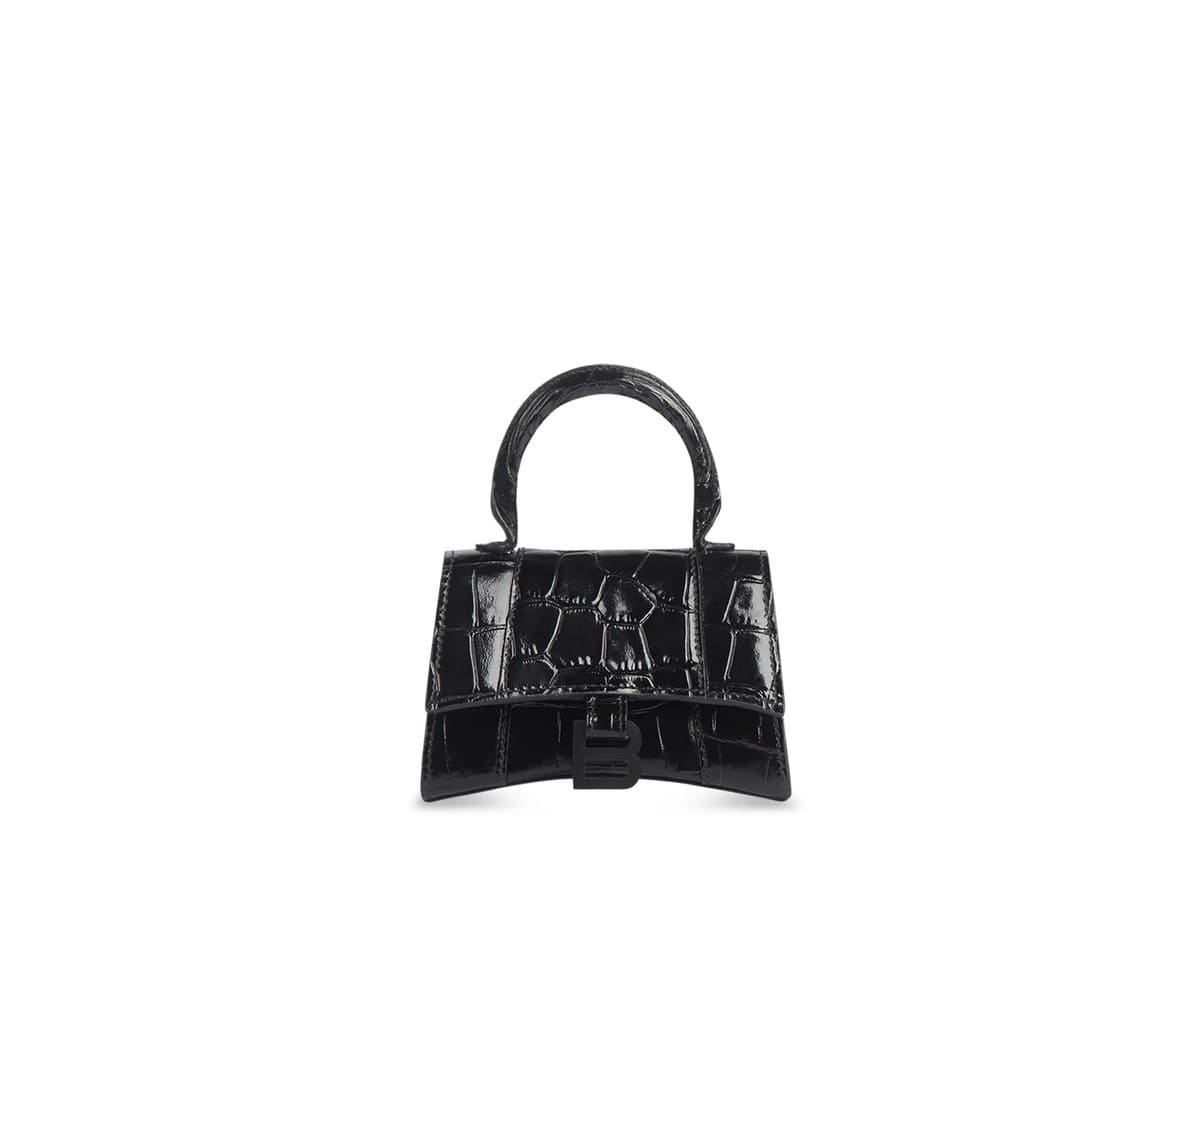 Balenciaga Hourglass Mini Bag in Croc Embossed black